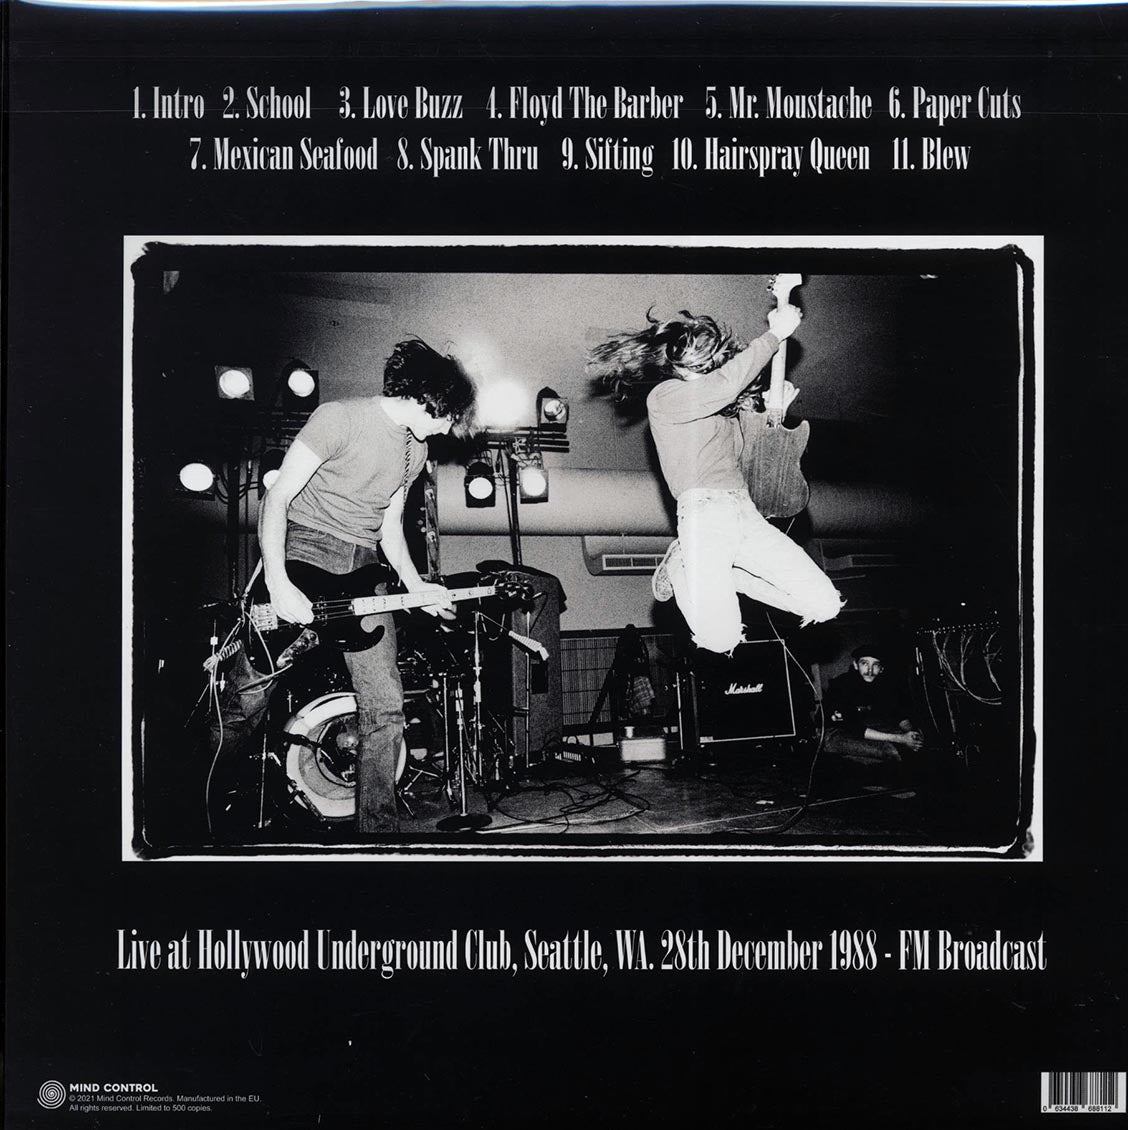 Nirvana - Live At Hollywood Underground Club, Seattle, WA, 28th December 1988 FM Broadcast